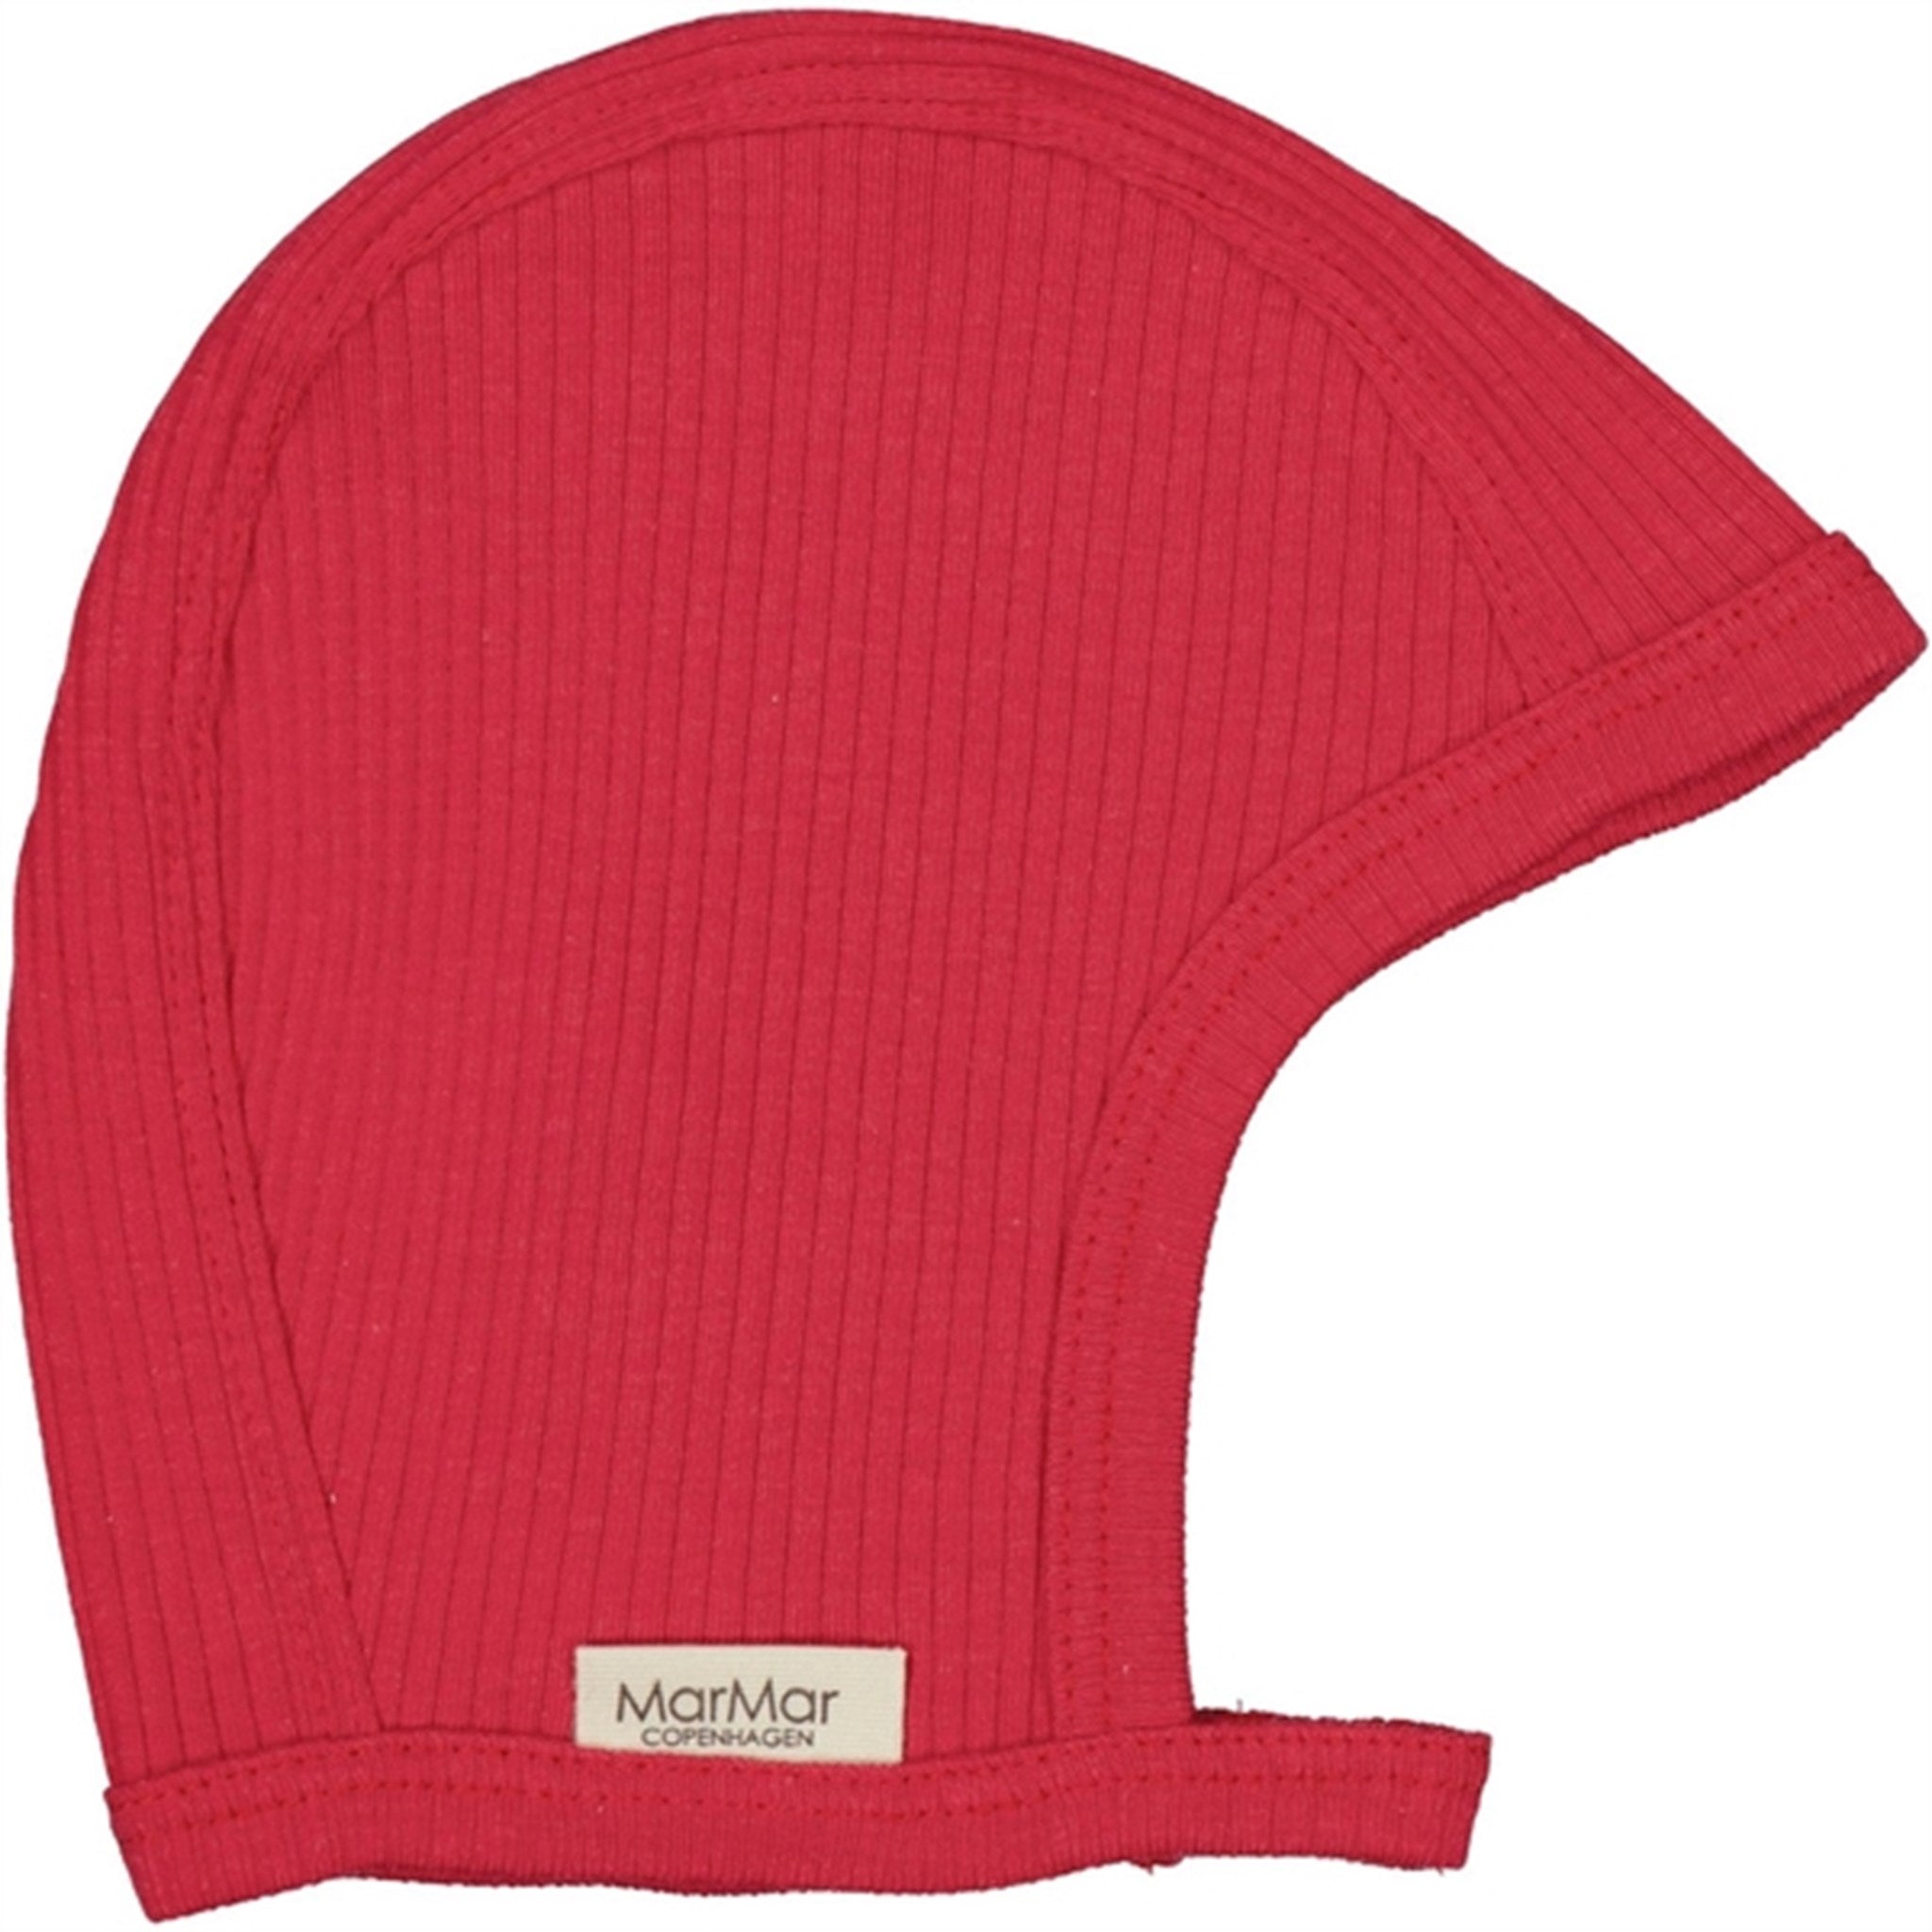 MarMar Modal Red Currant Hat